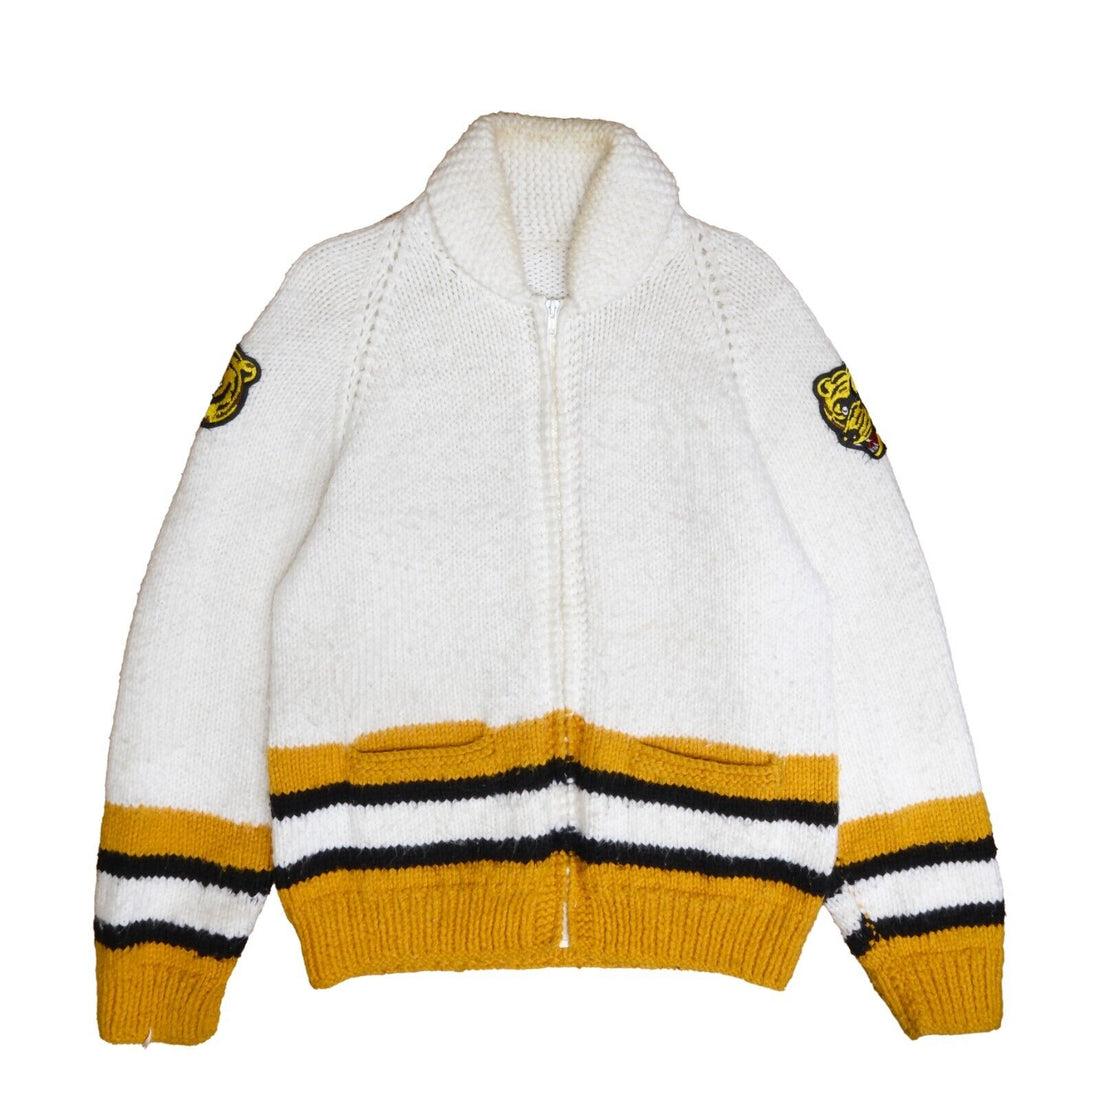 Vintage Boston Bruins Wool Knit Cowichan Cardigan Sweater Size Large NHL